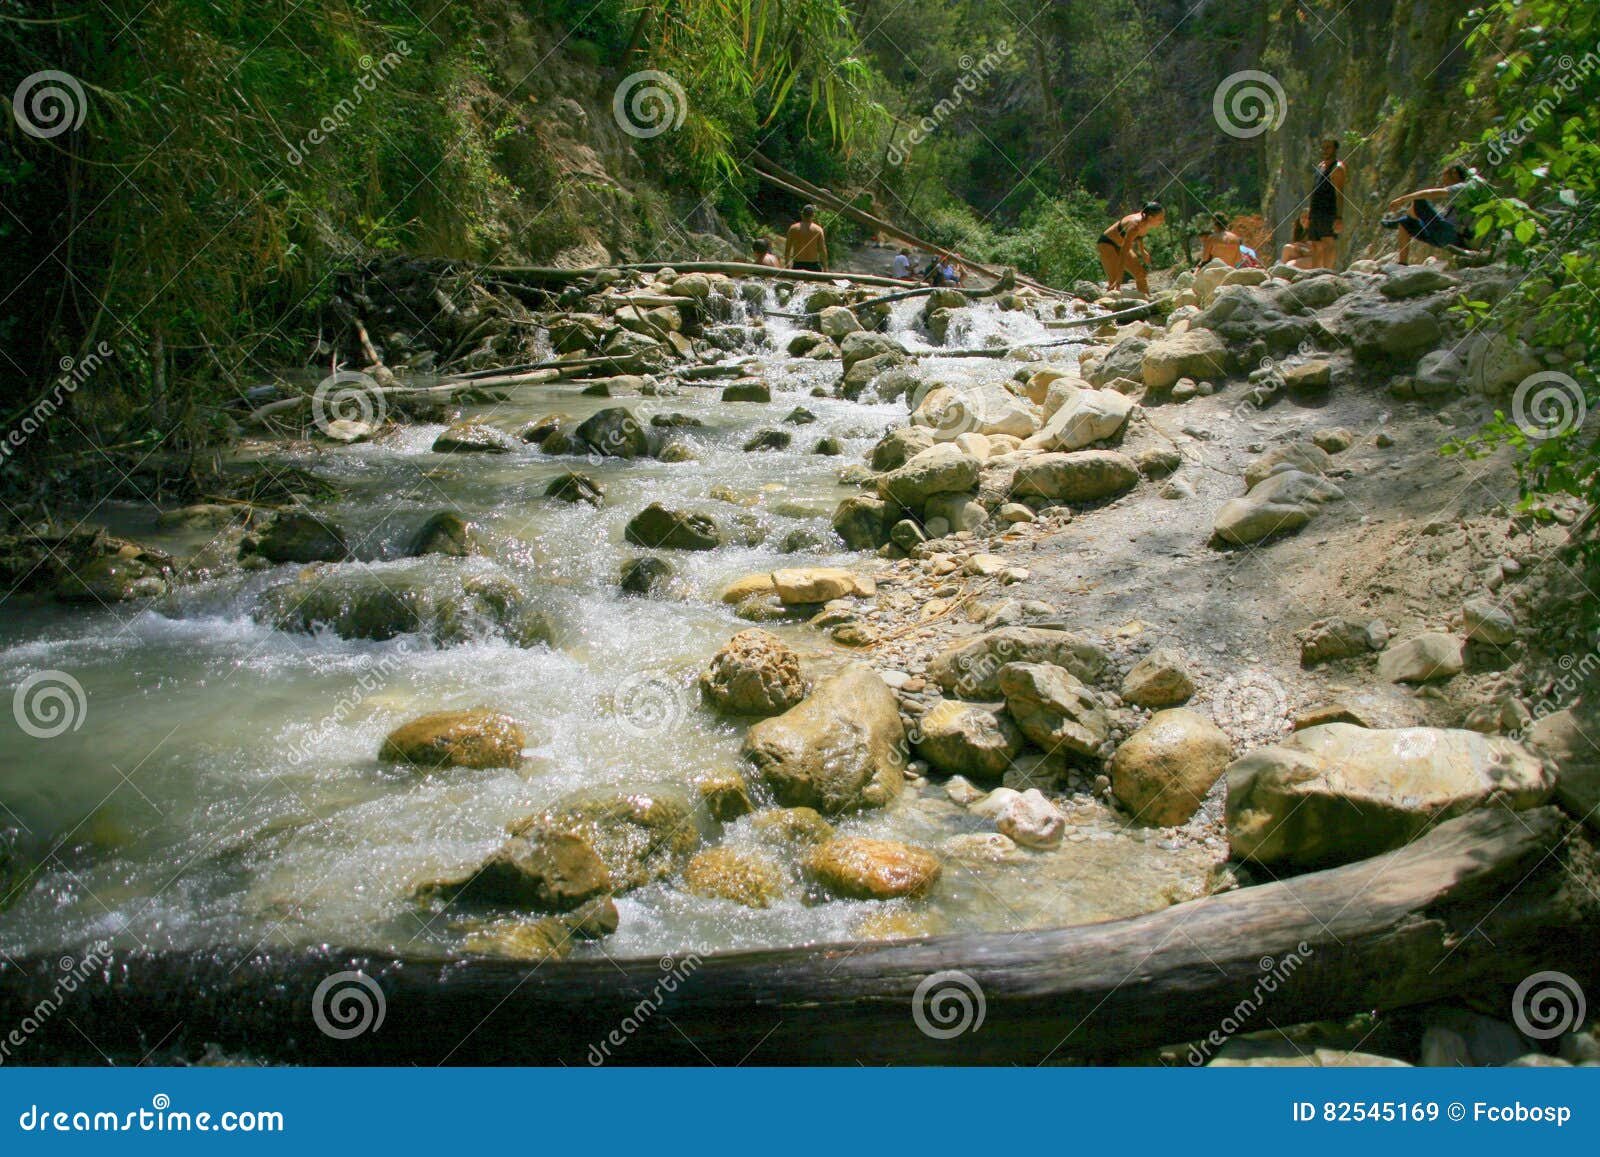 hikers in the chillar river, nerja, malaga